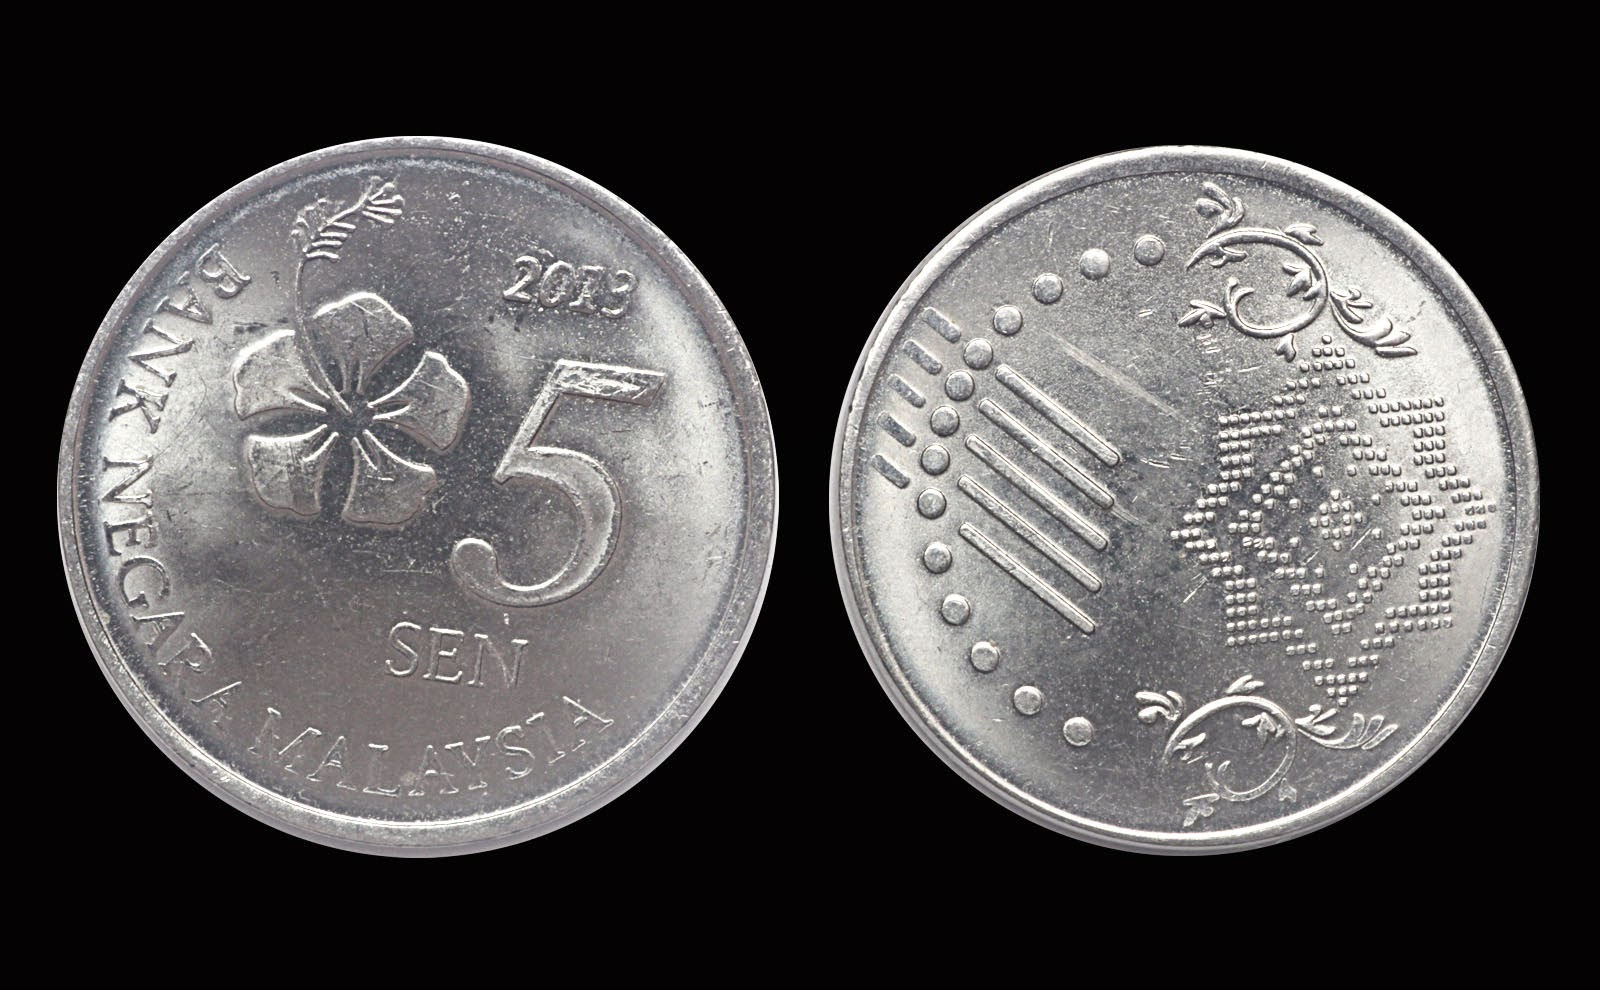 Koleksi duit syiling Malaysia (Malaya) - Unikversiti